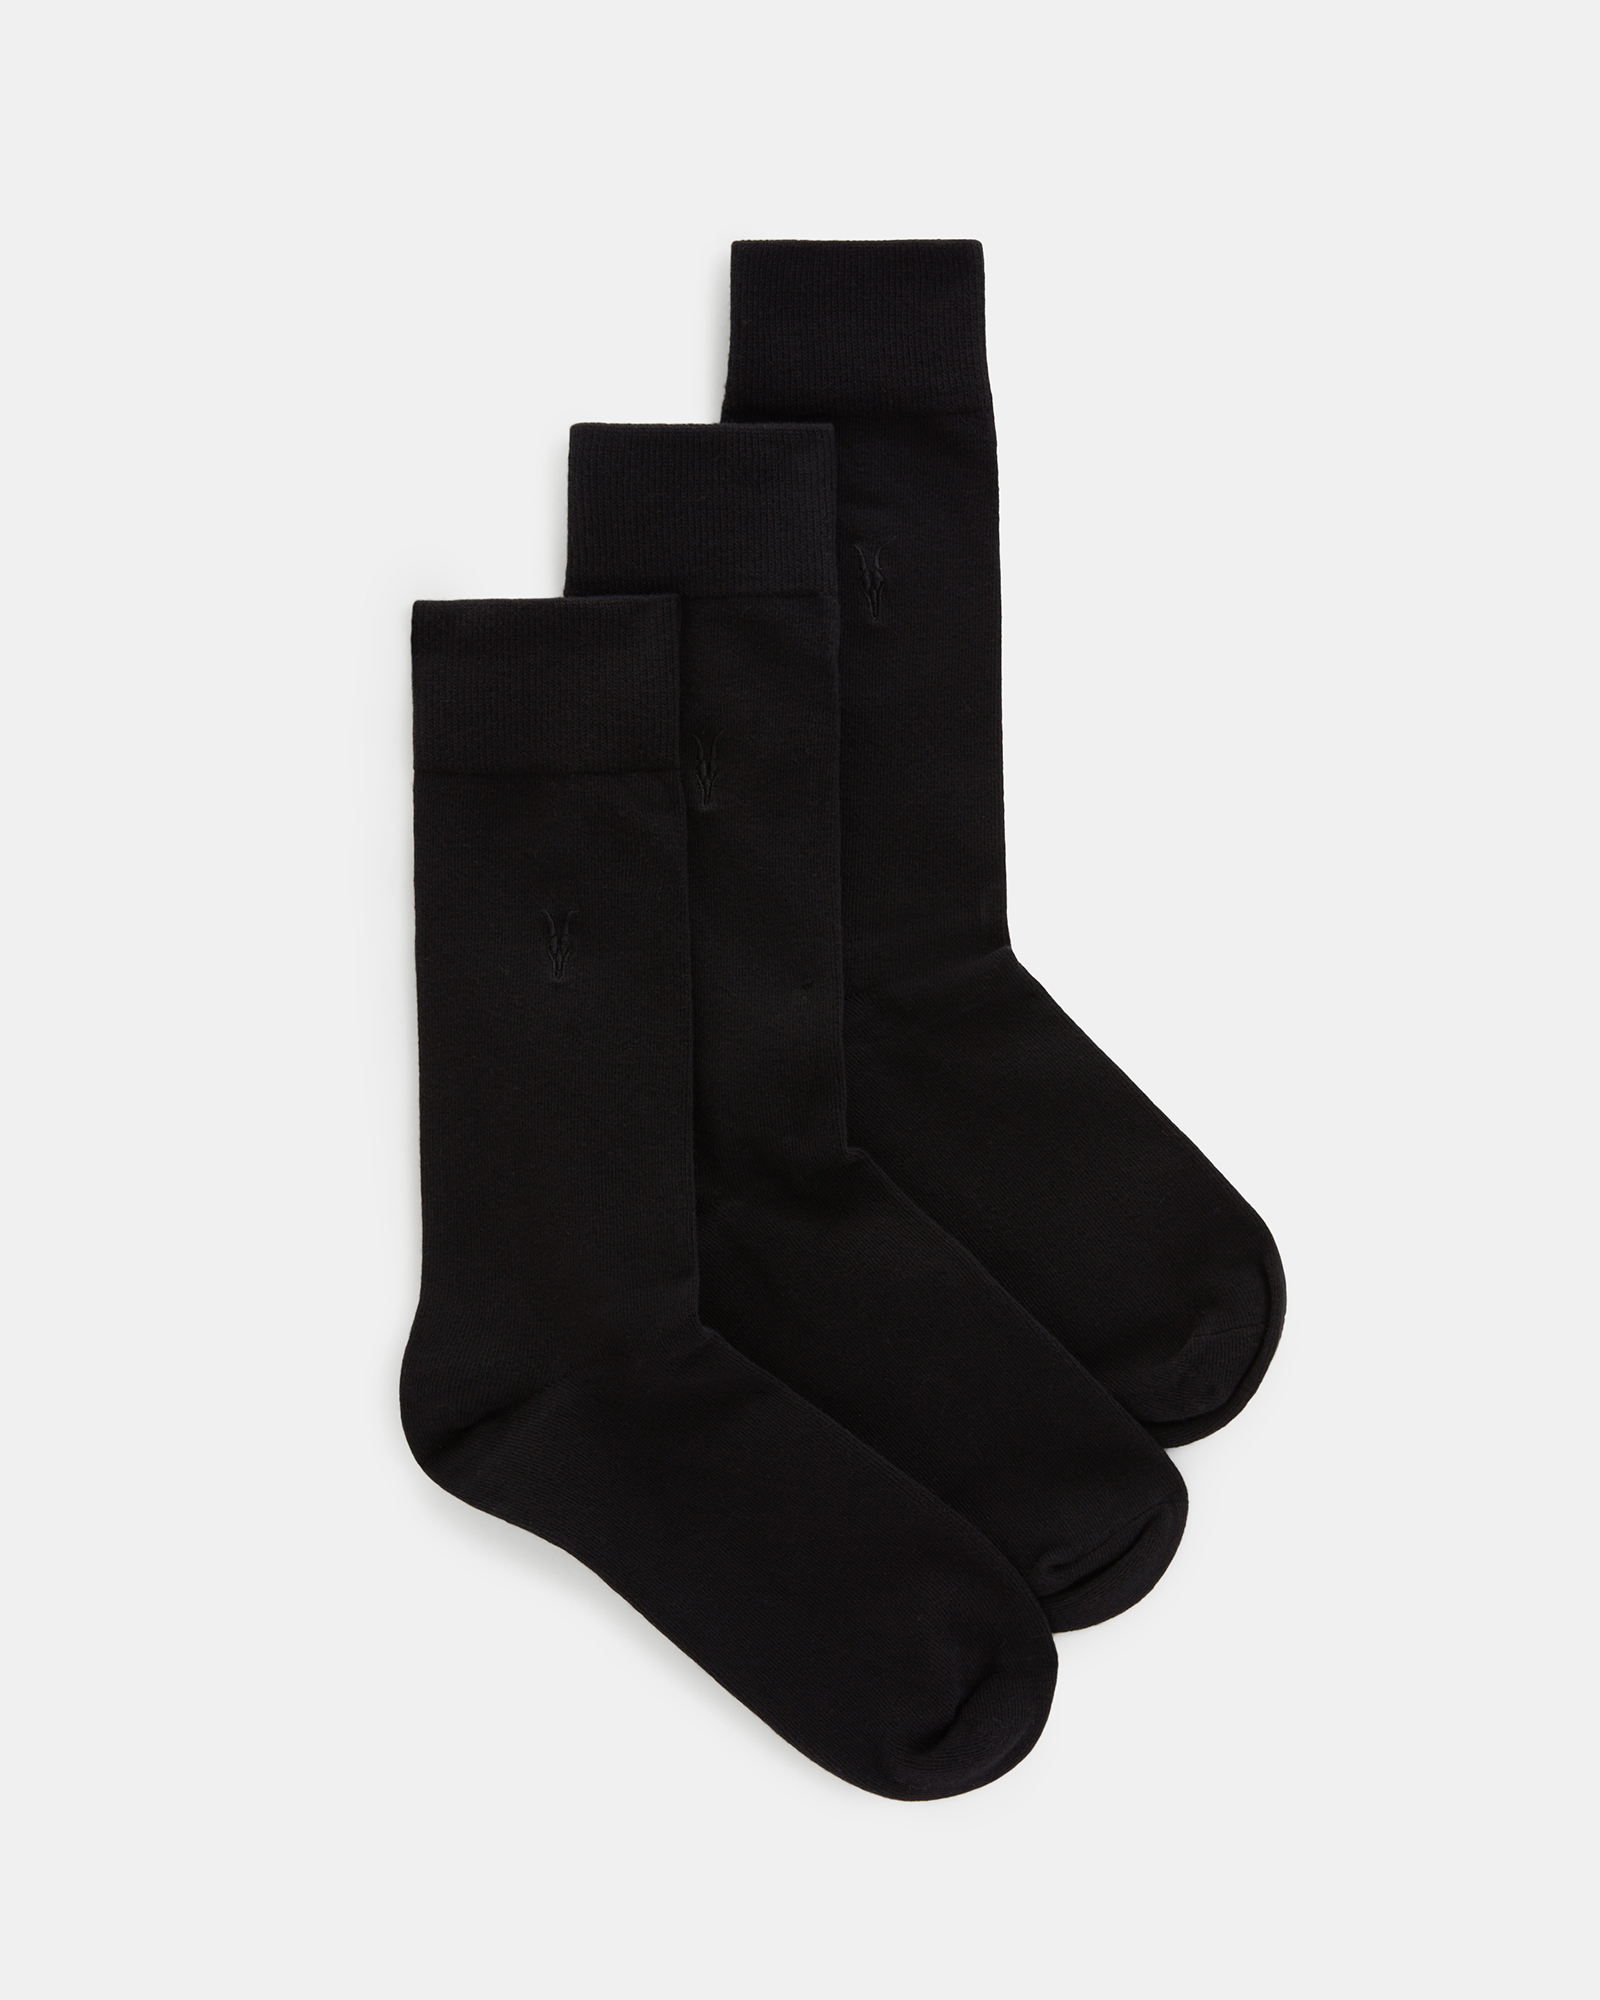 AllSaints Adan Ramskull Embroidered Socks 3 Pack,, BLACK/BLACK/BLACK